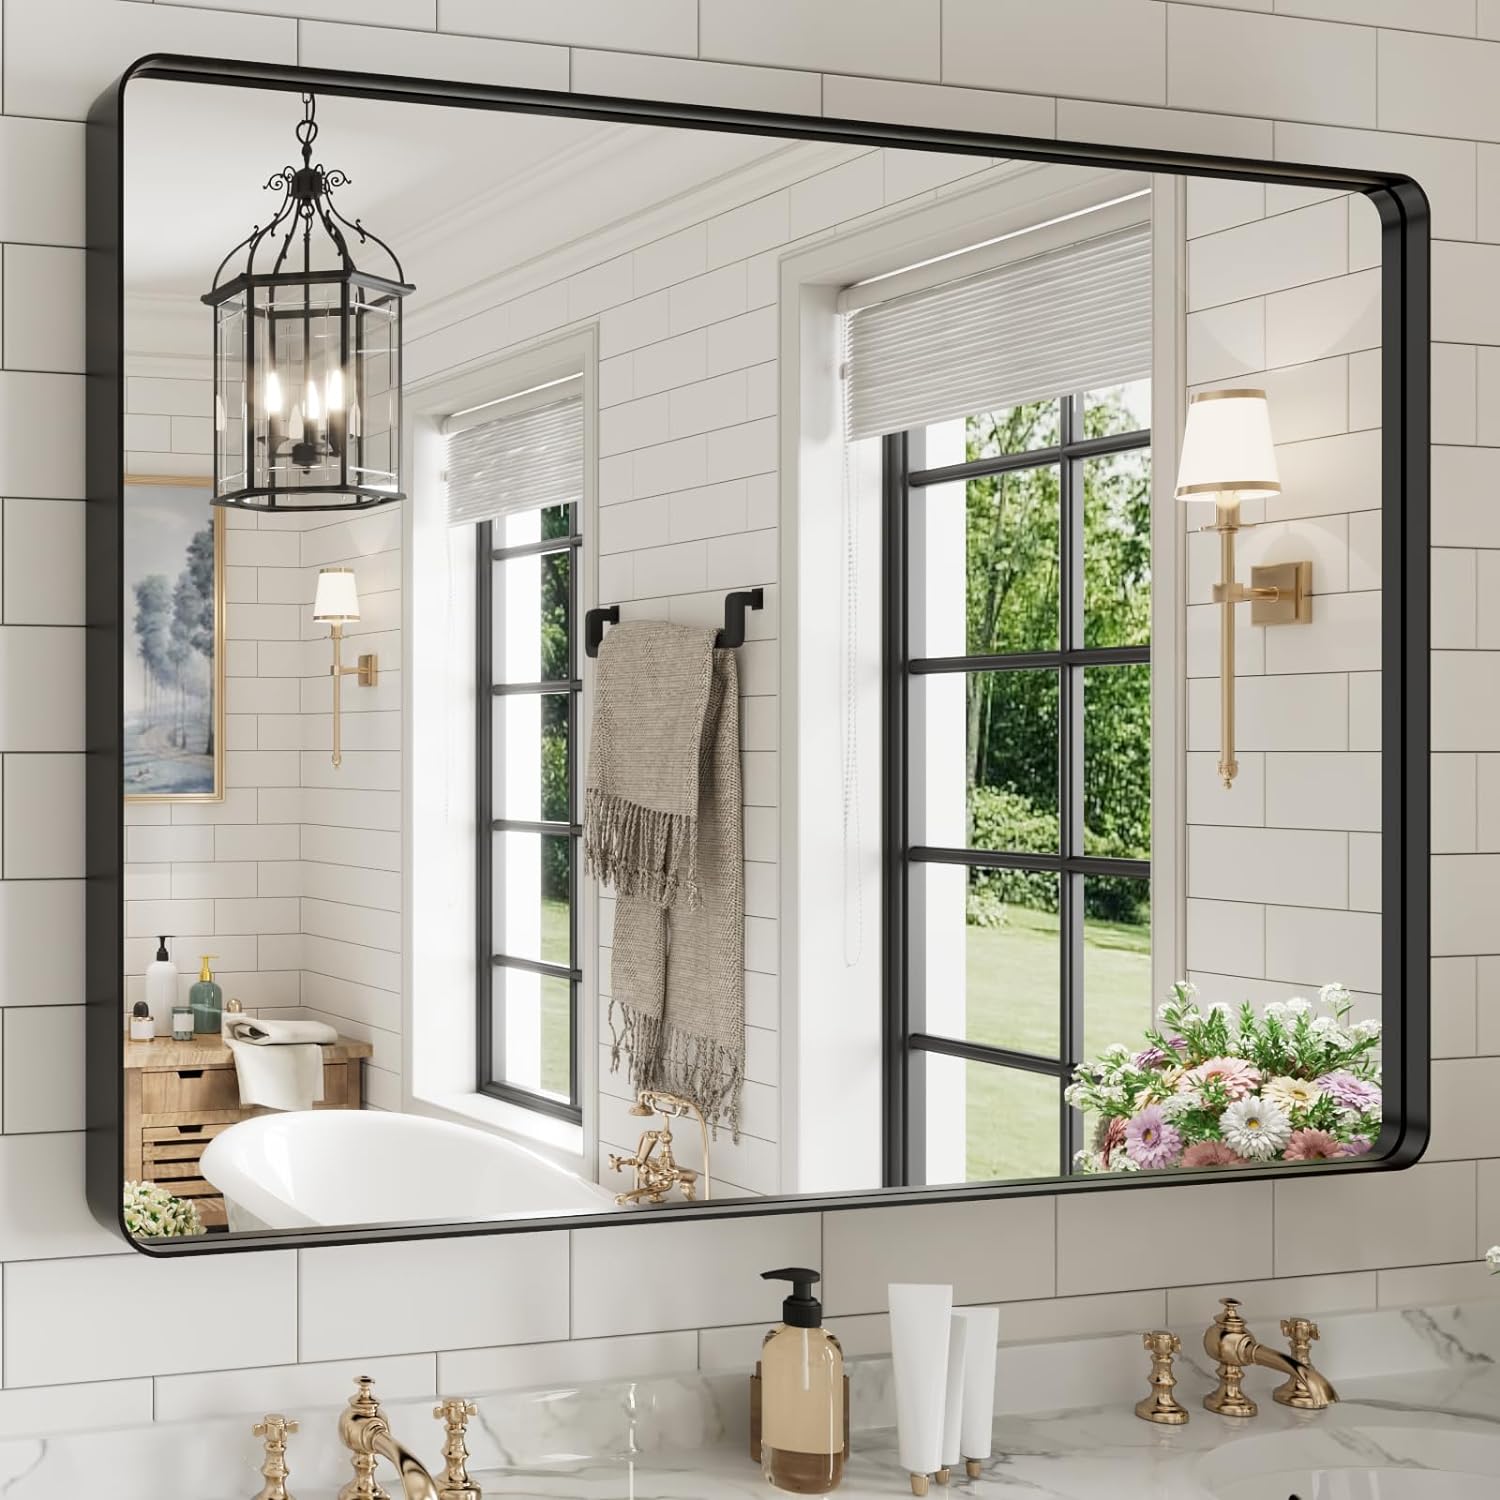 WEER Black Bathroom Mirror for Wall, 48X40 Inch Matte Black Mirror - $230